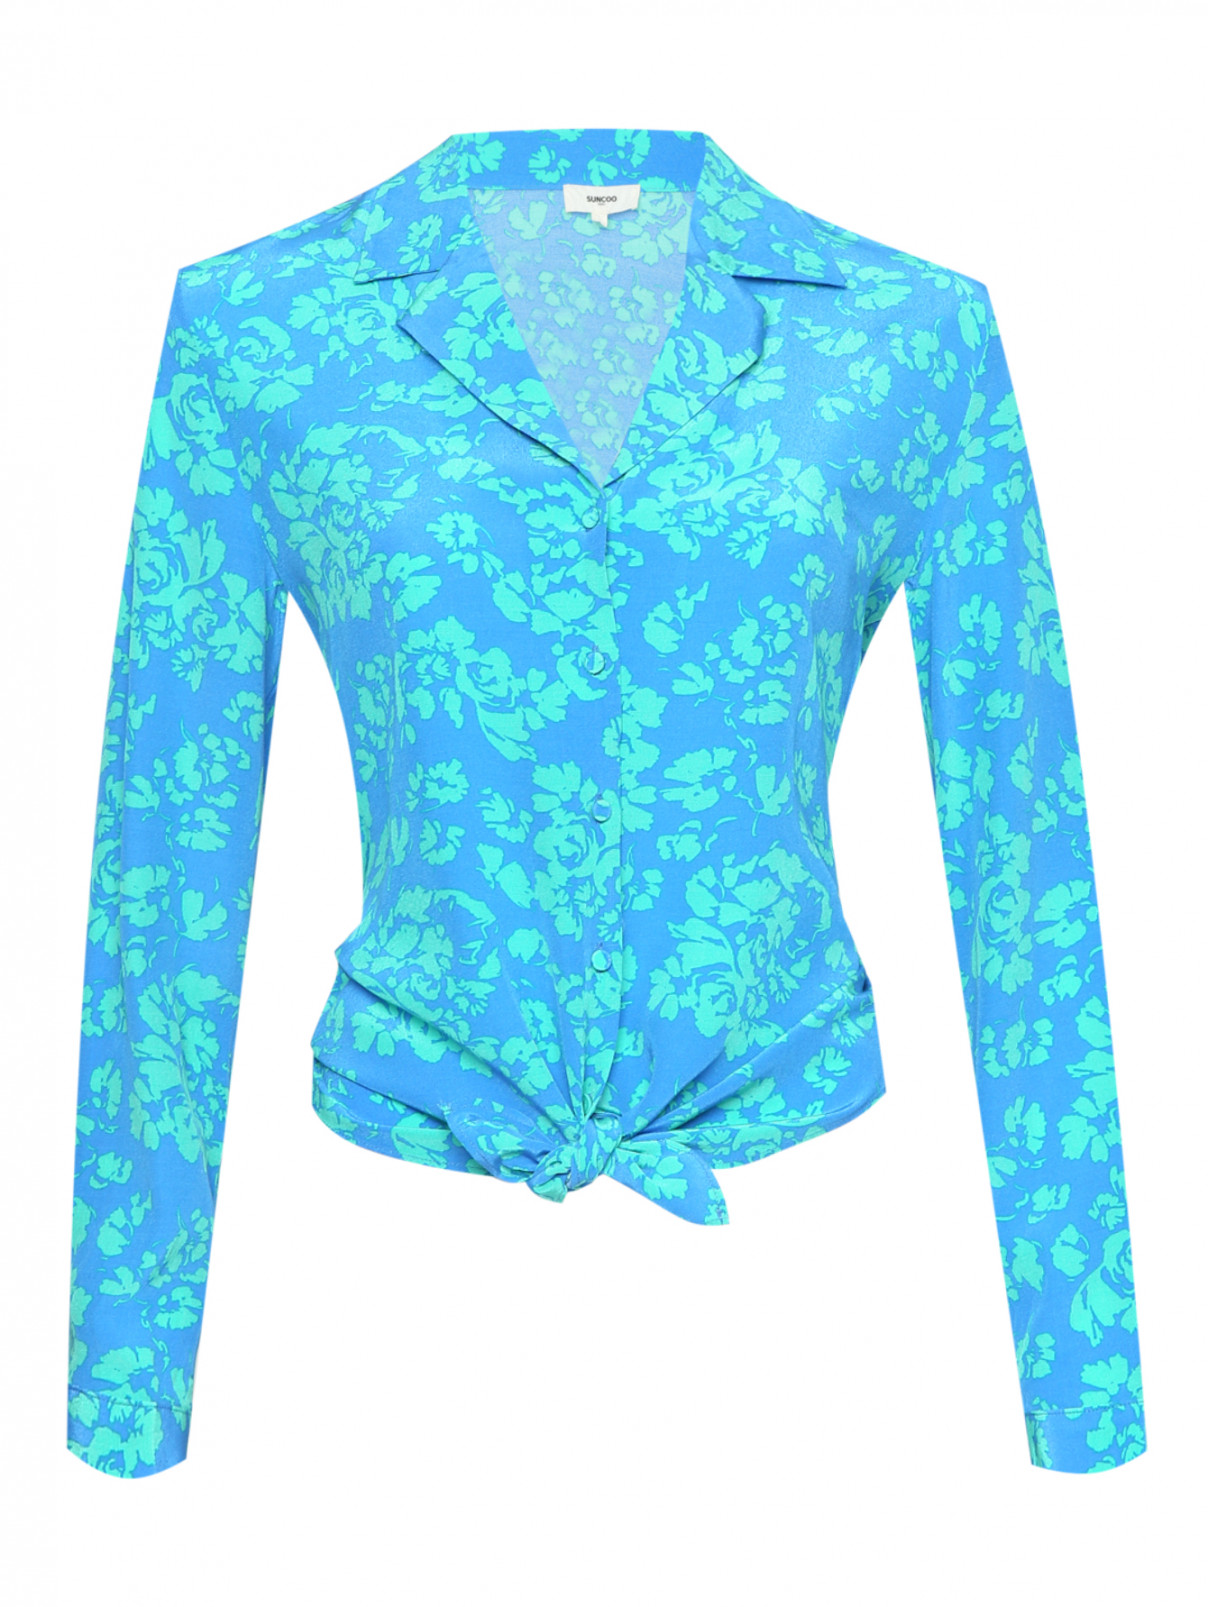 Блуза с узором на пуговицах Suncoo  –  Общий вид  – Цвет:  Узор